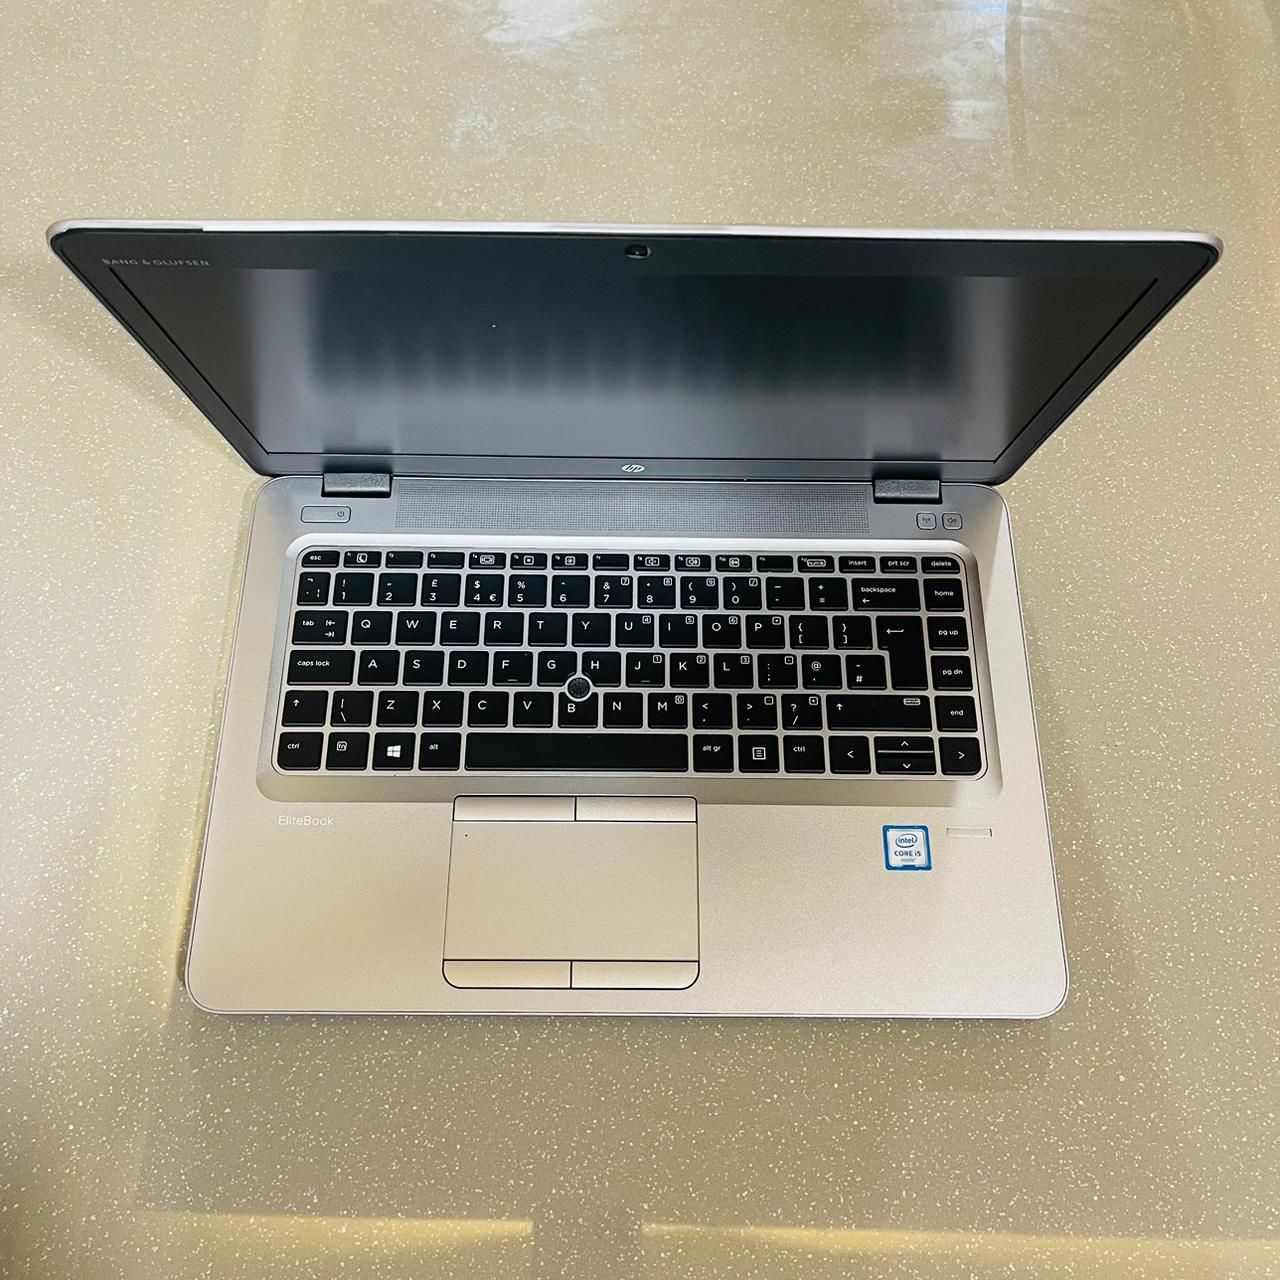 HP Elitebook 840 G3 i5 6th Generation Laptop - Destiny Infotech